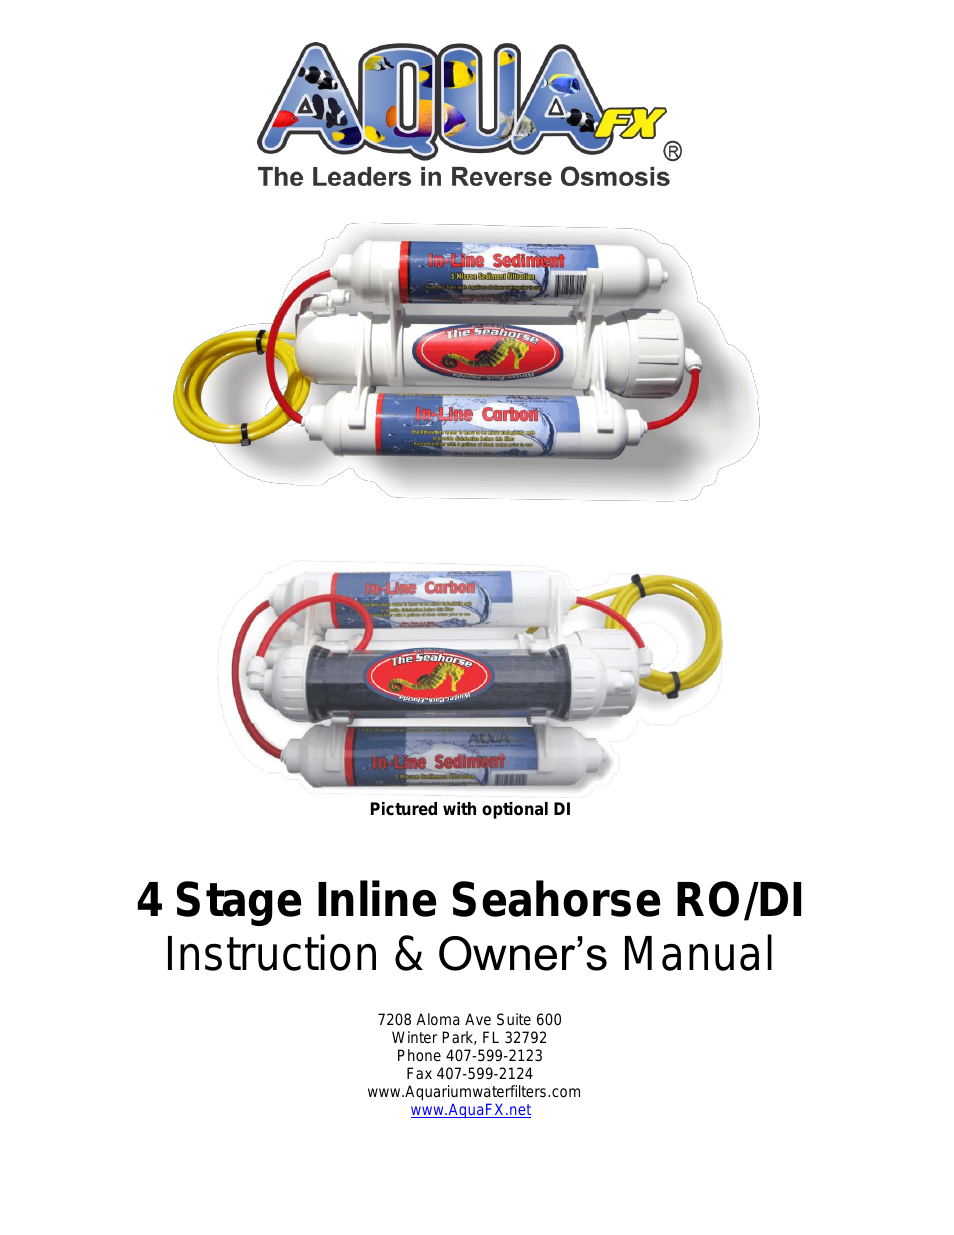 The AquaFX Seahorse Inline RO/DI